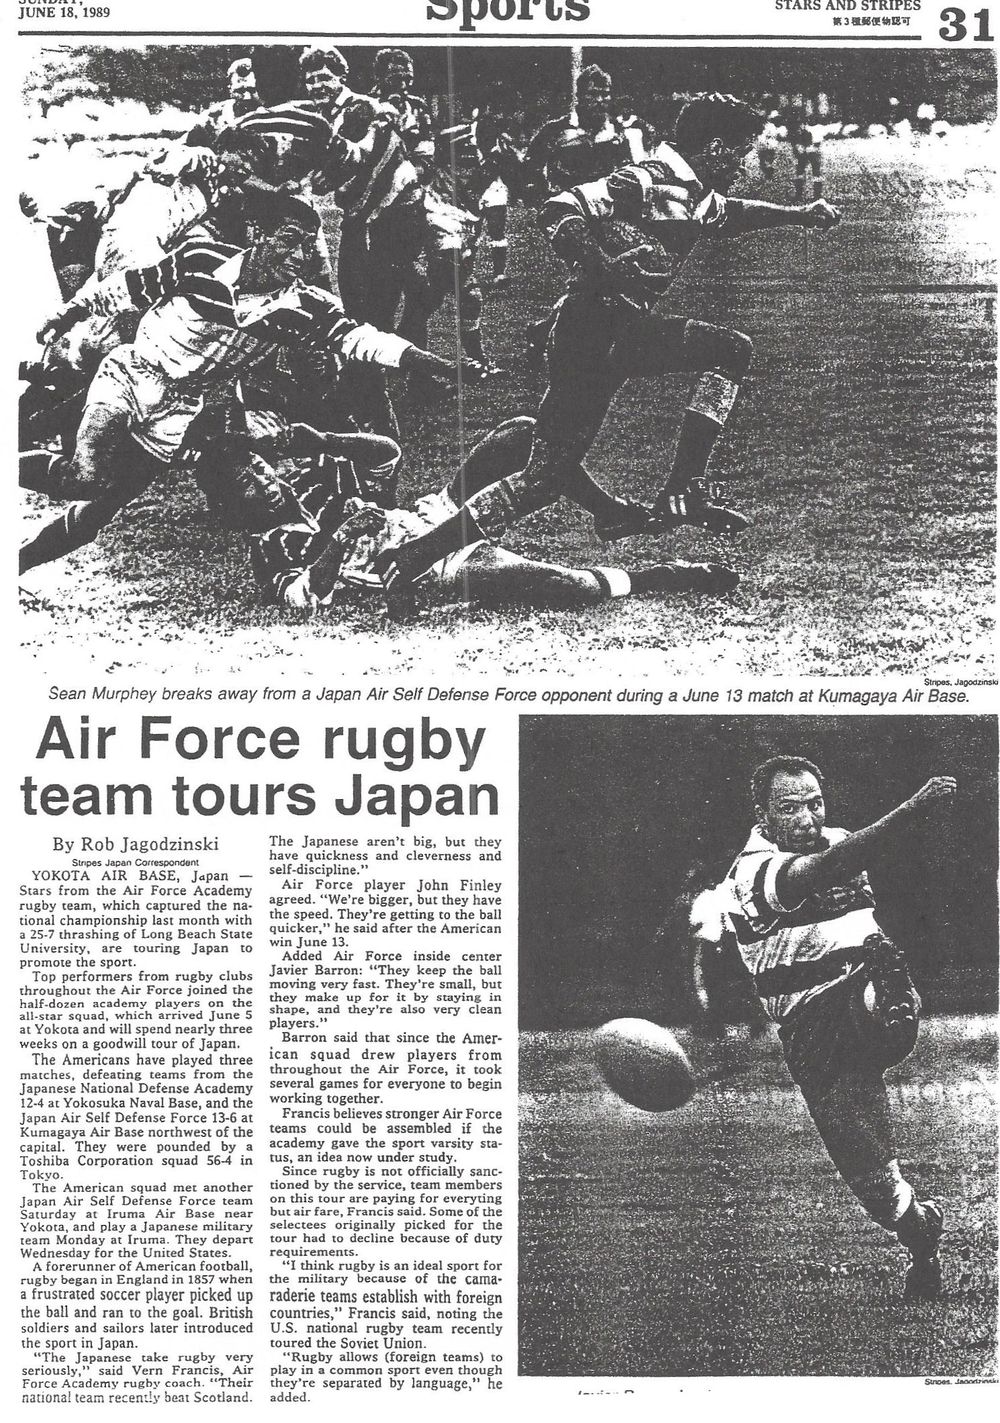 1989 Japan tour summary report 11.jpg